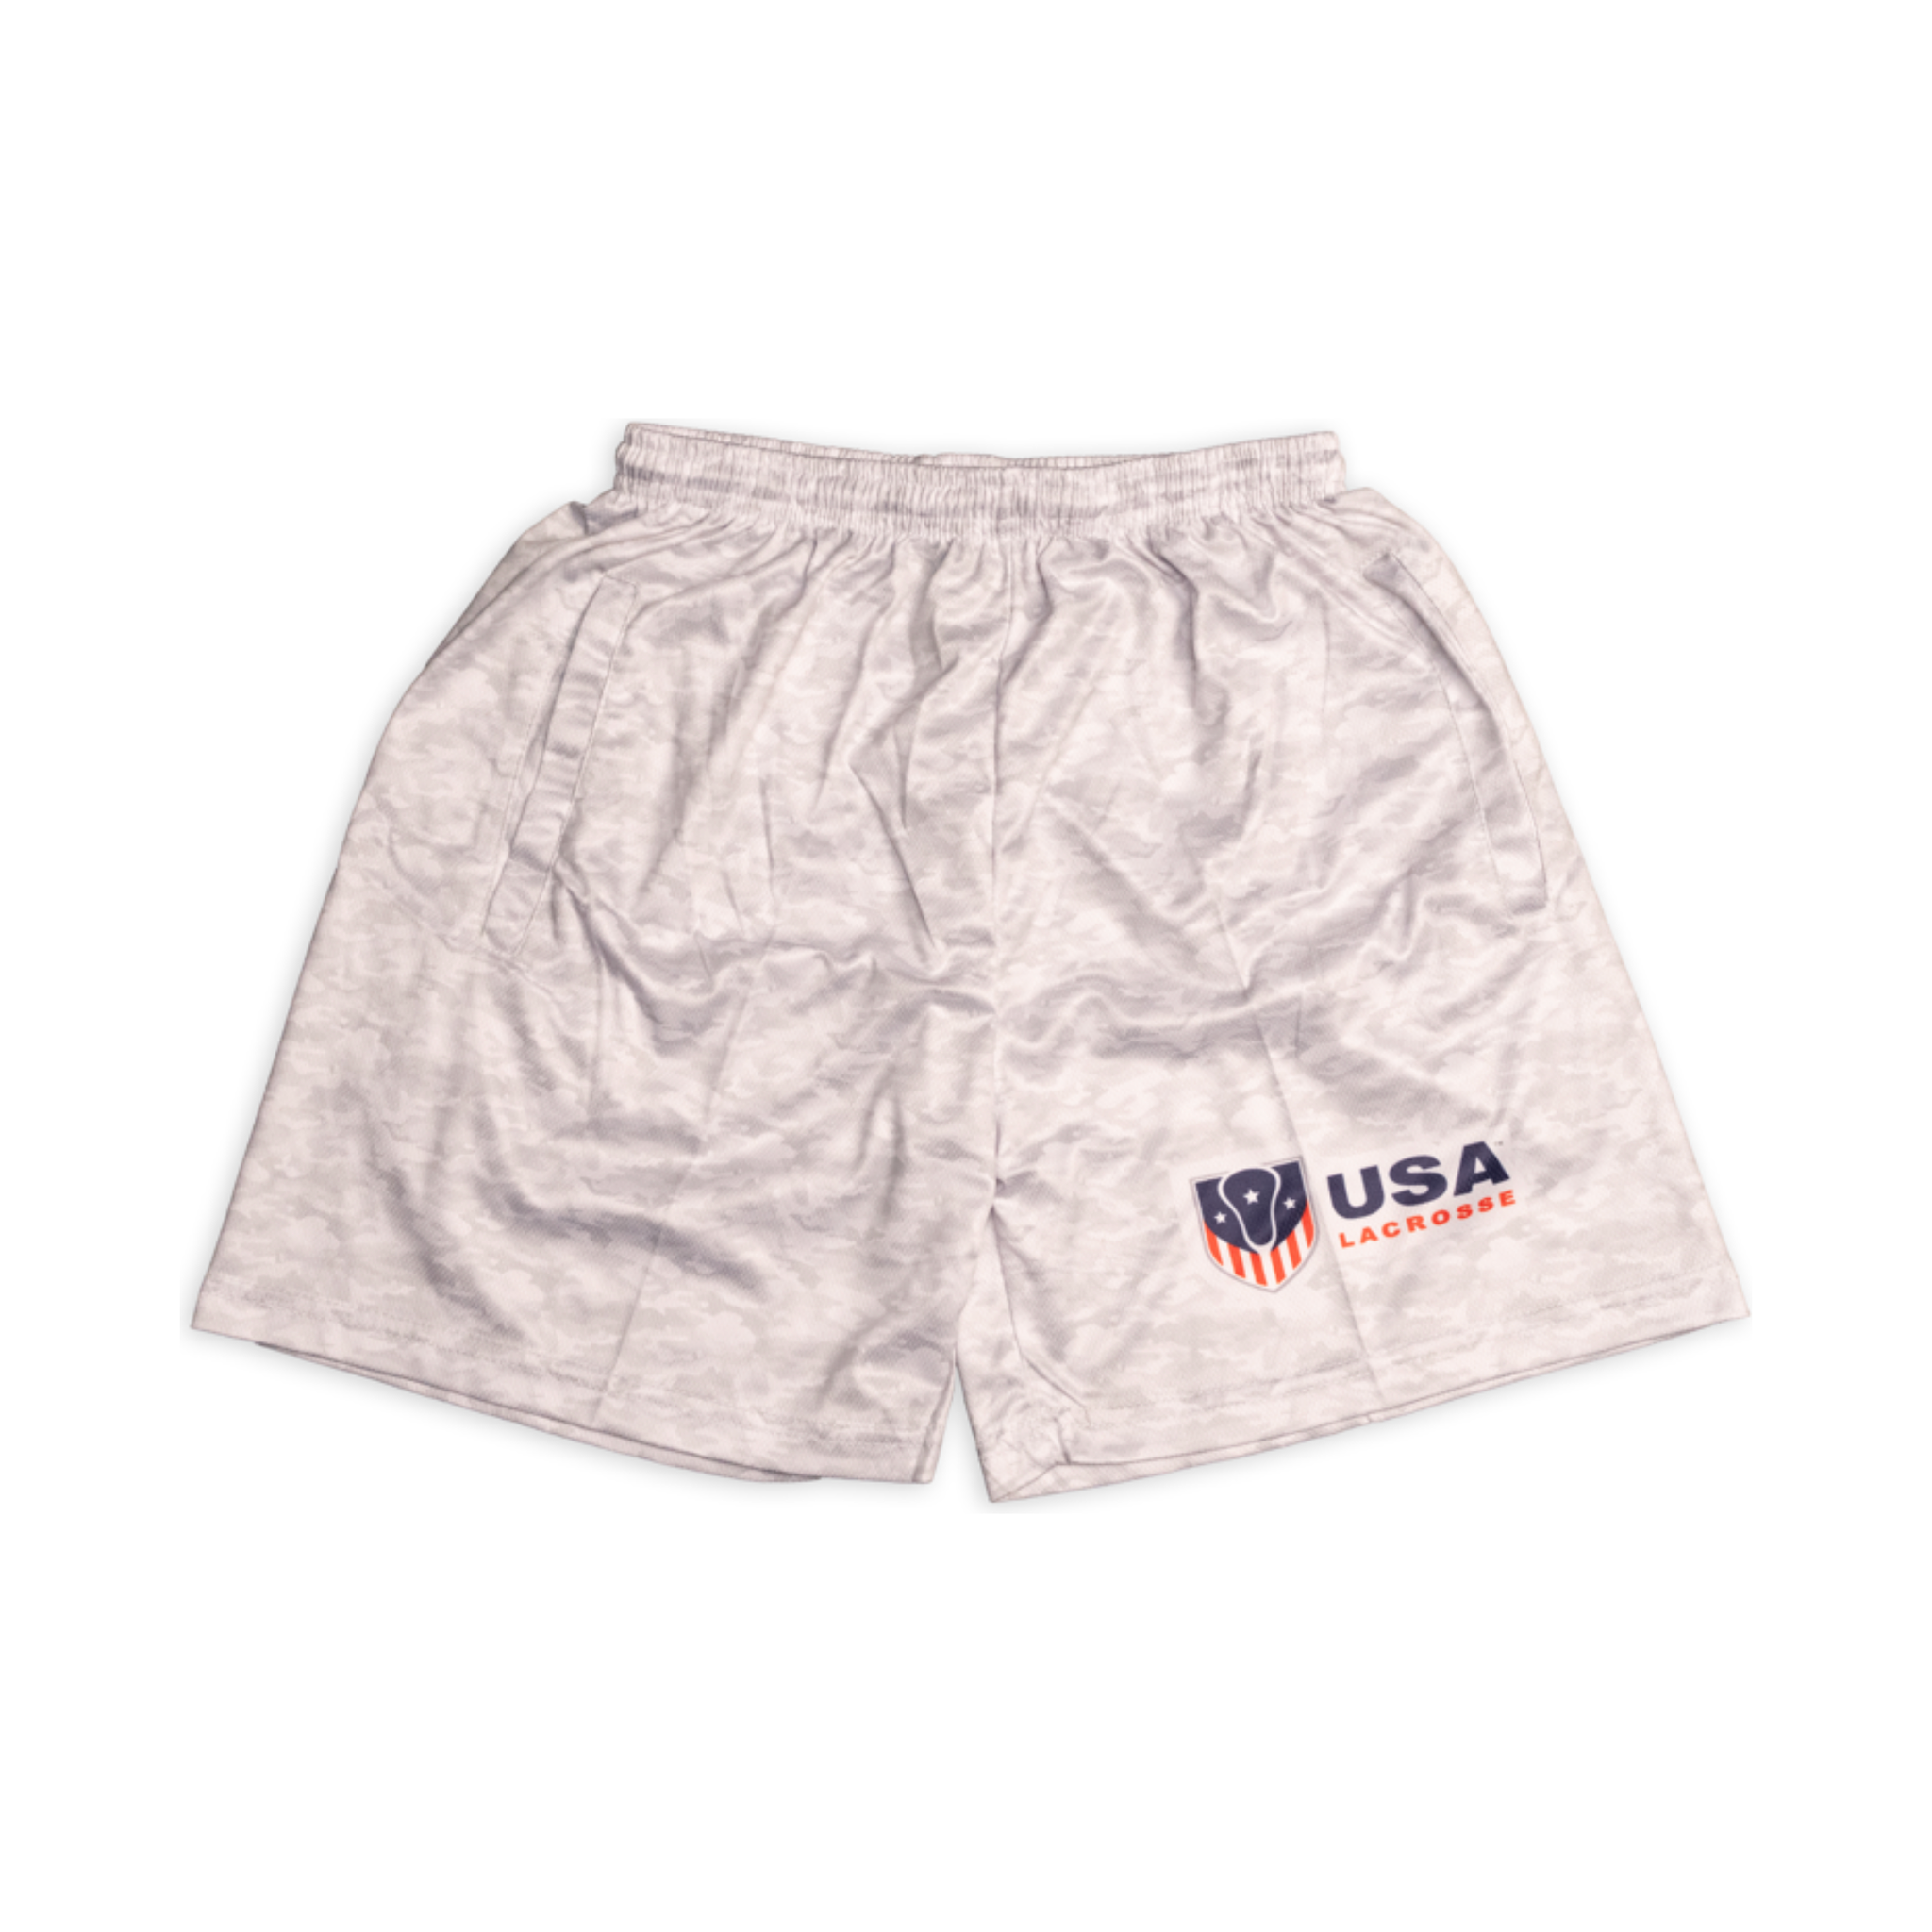 Youth USA Lacrosse Grey Camo Shorts